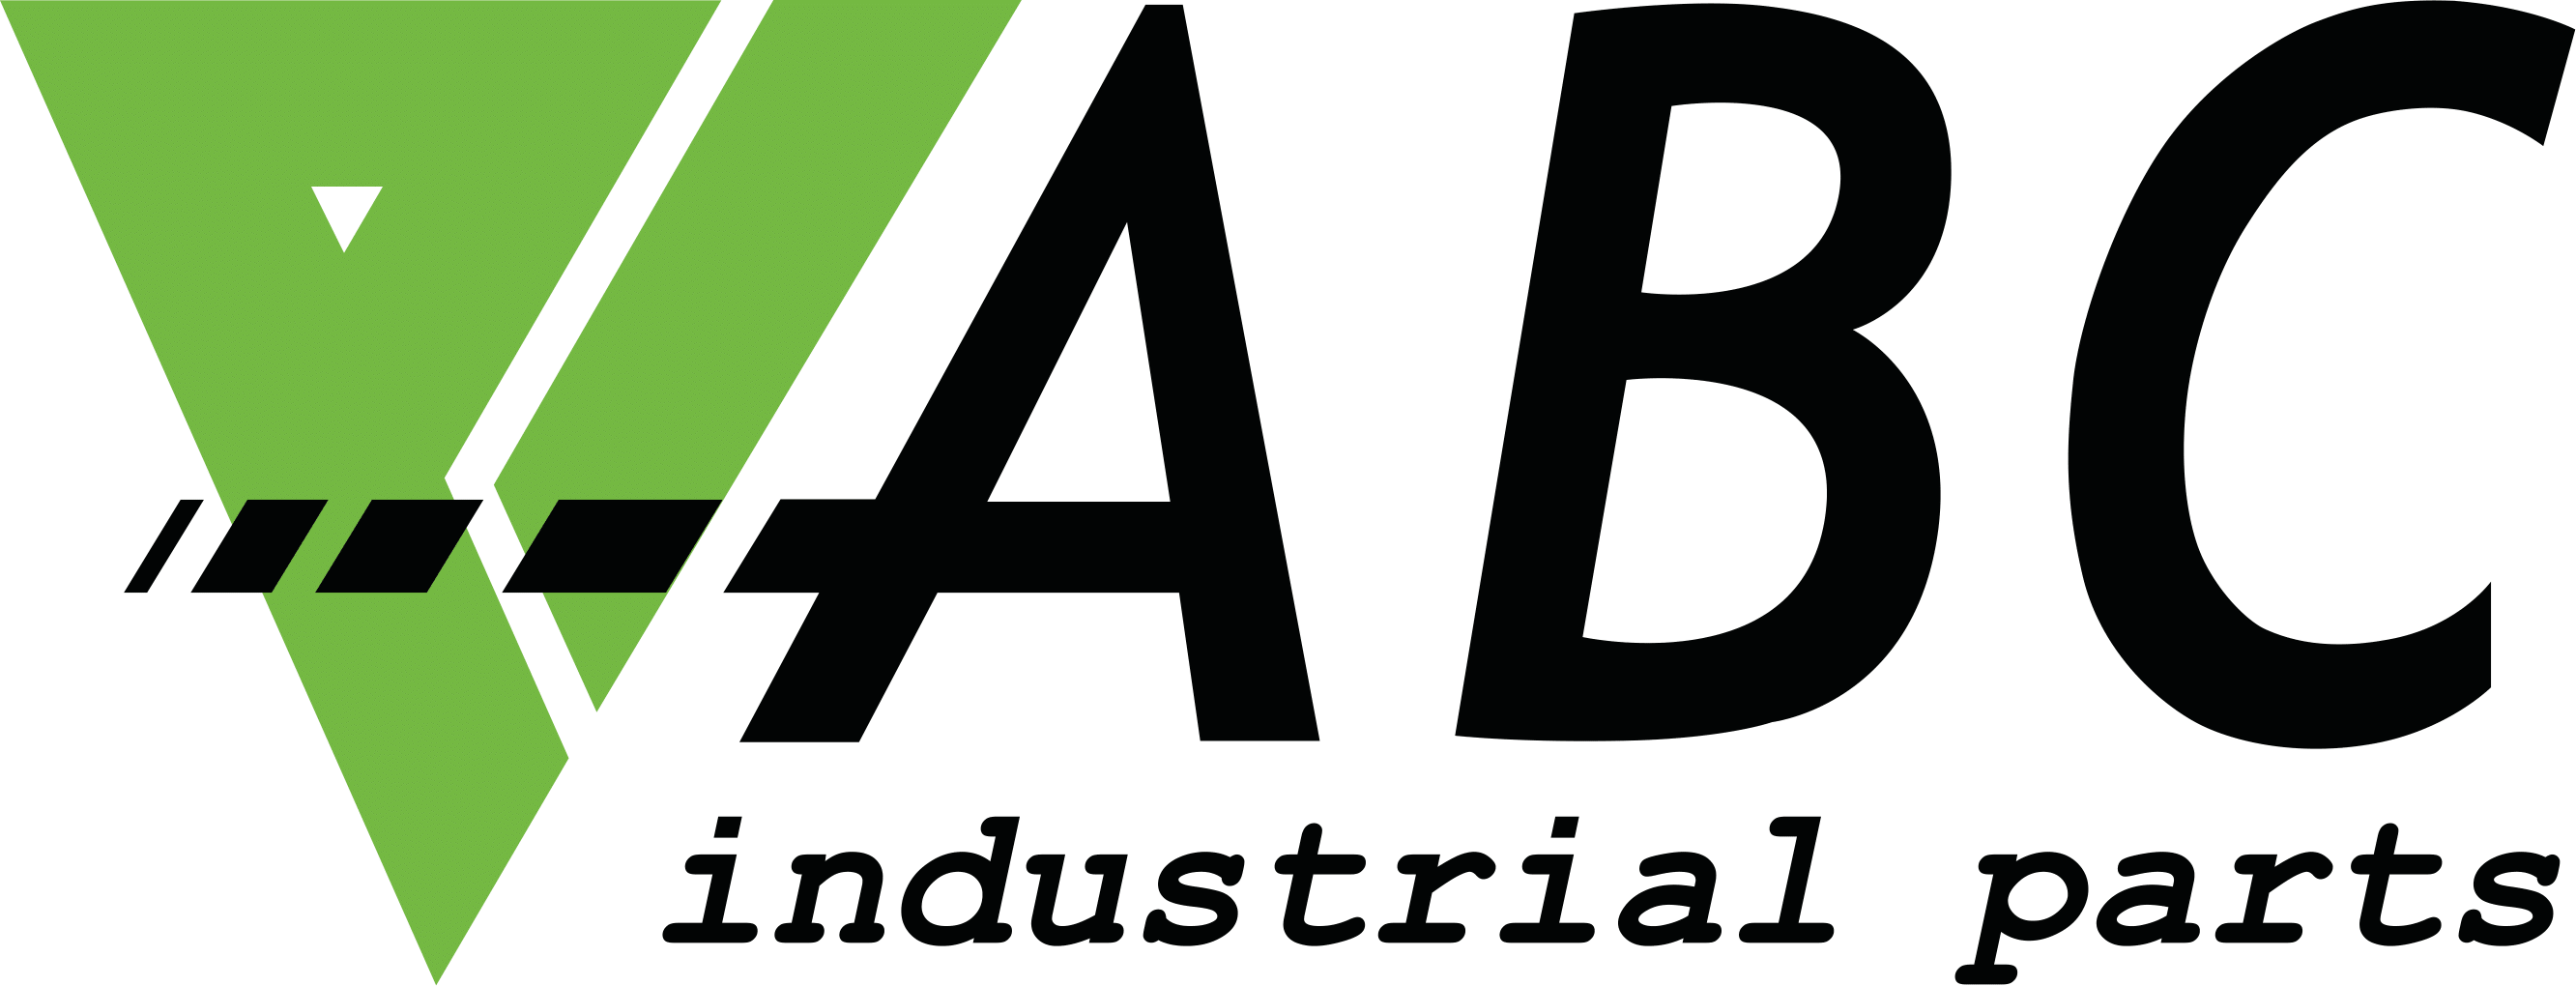 ABC_Industrial_Parts